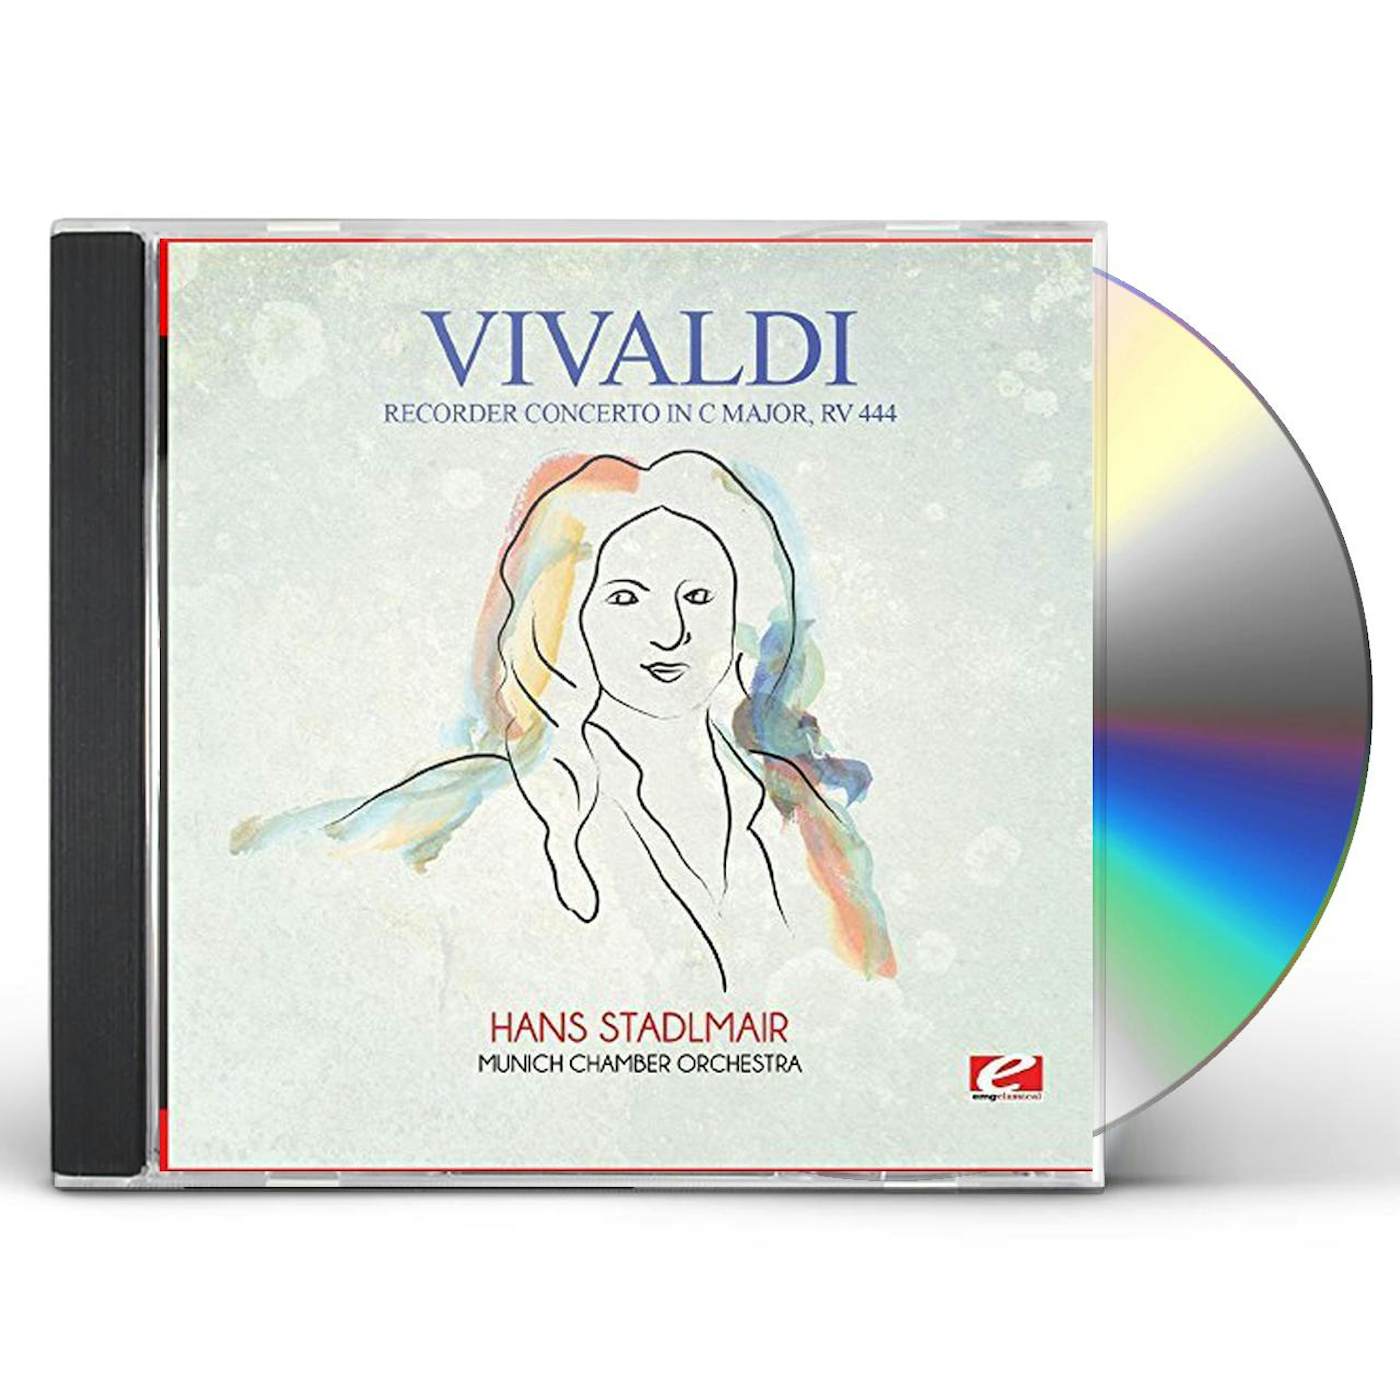 Antonio Vivaldi RECORDER CONCERTO IN C MAJOR RV 444 CD